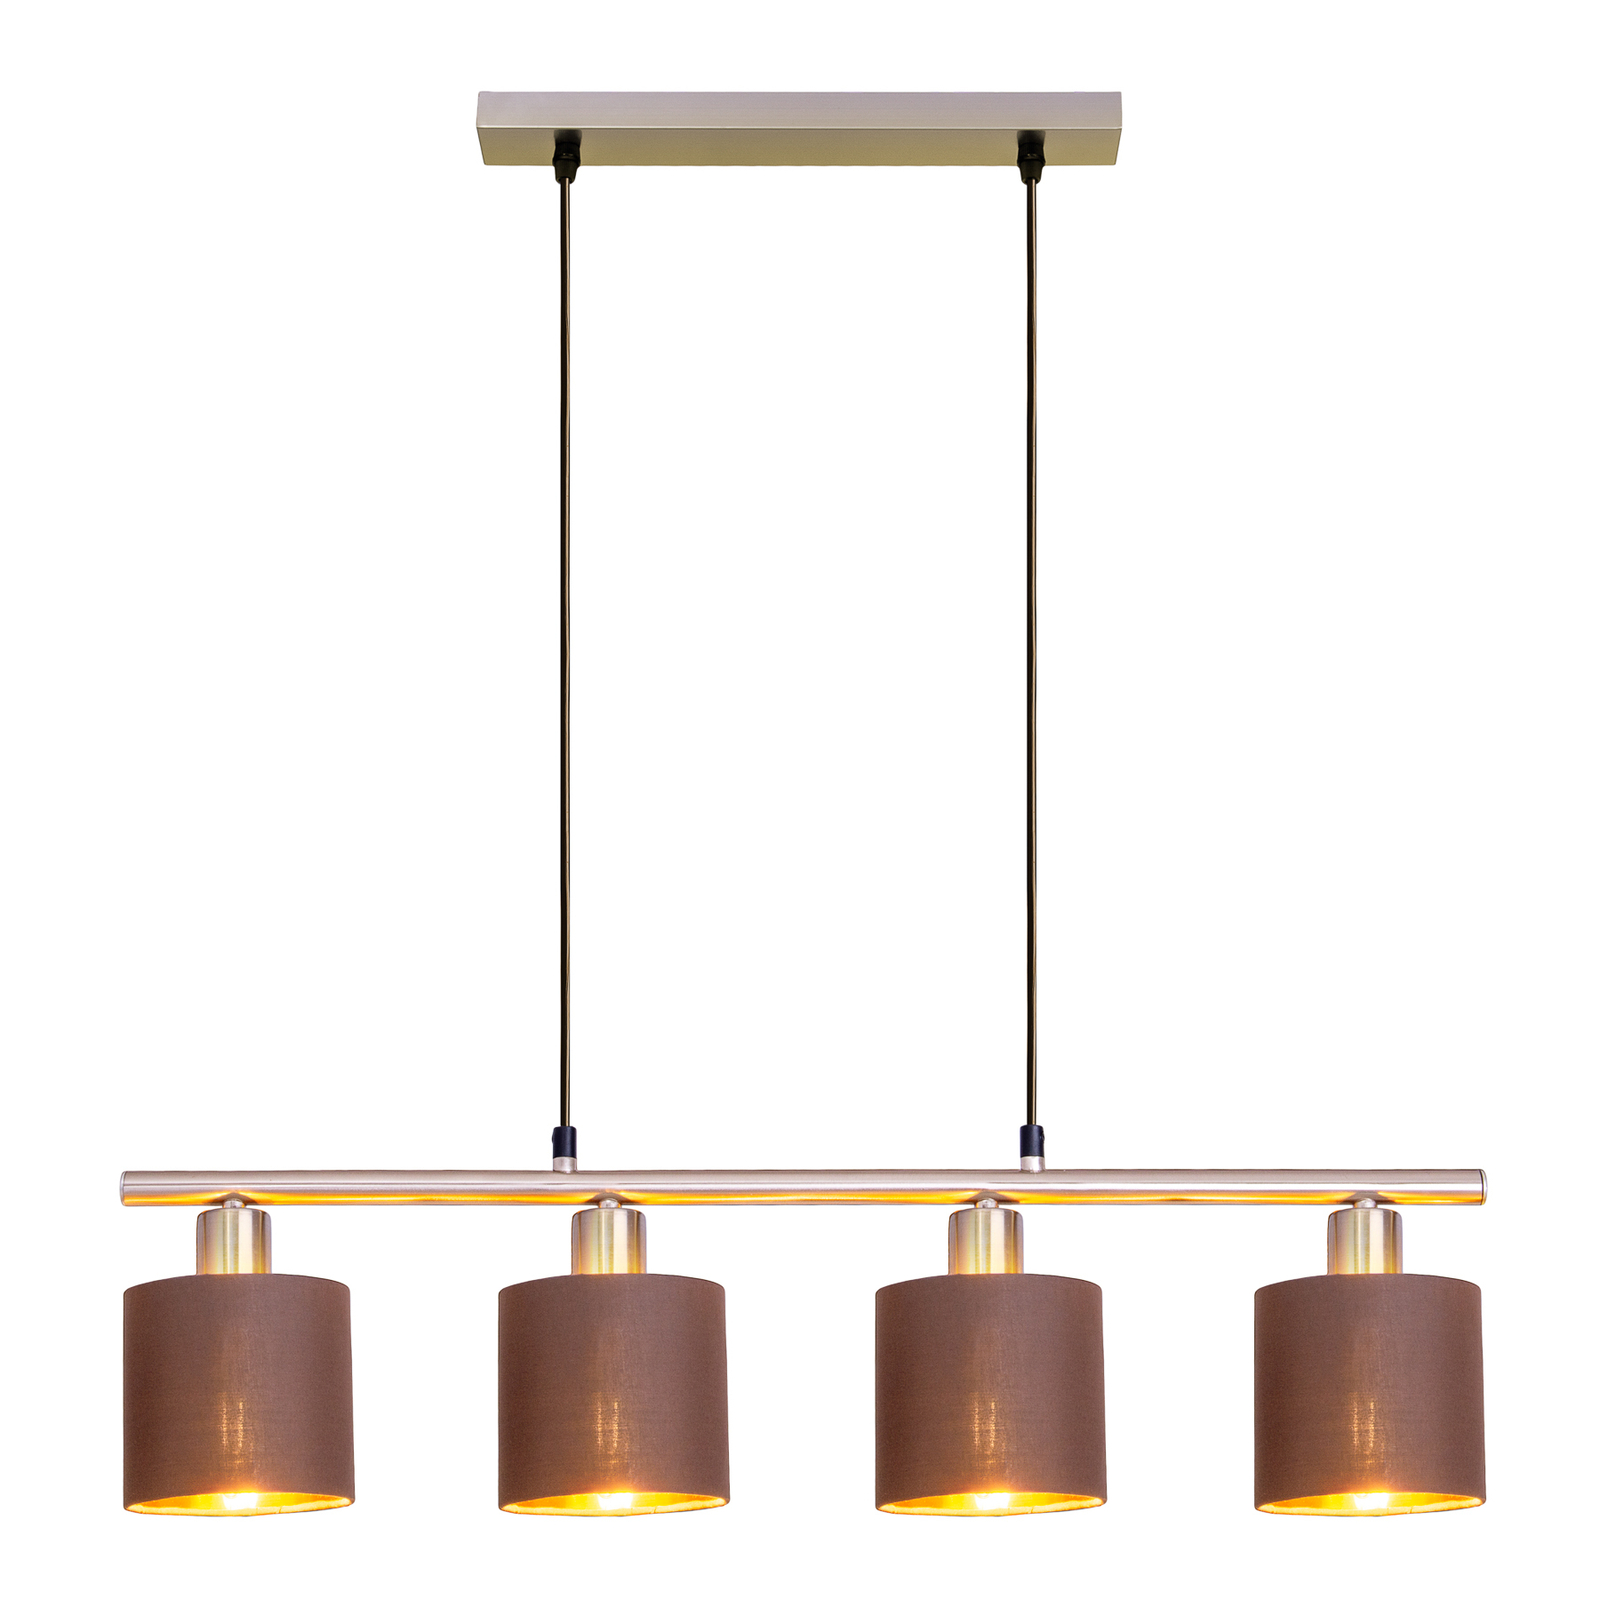 Maron hængelampe, 4 lyskilder, stof, brun/guld